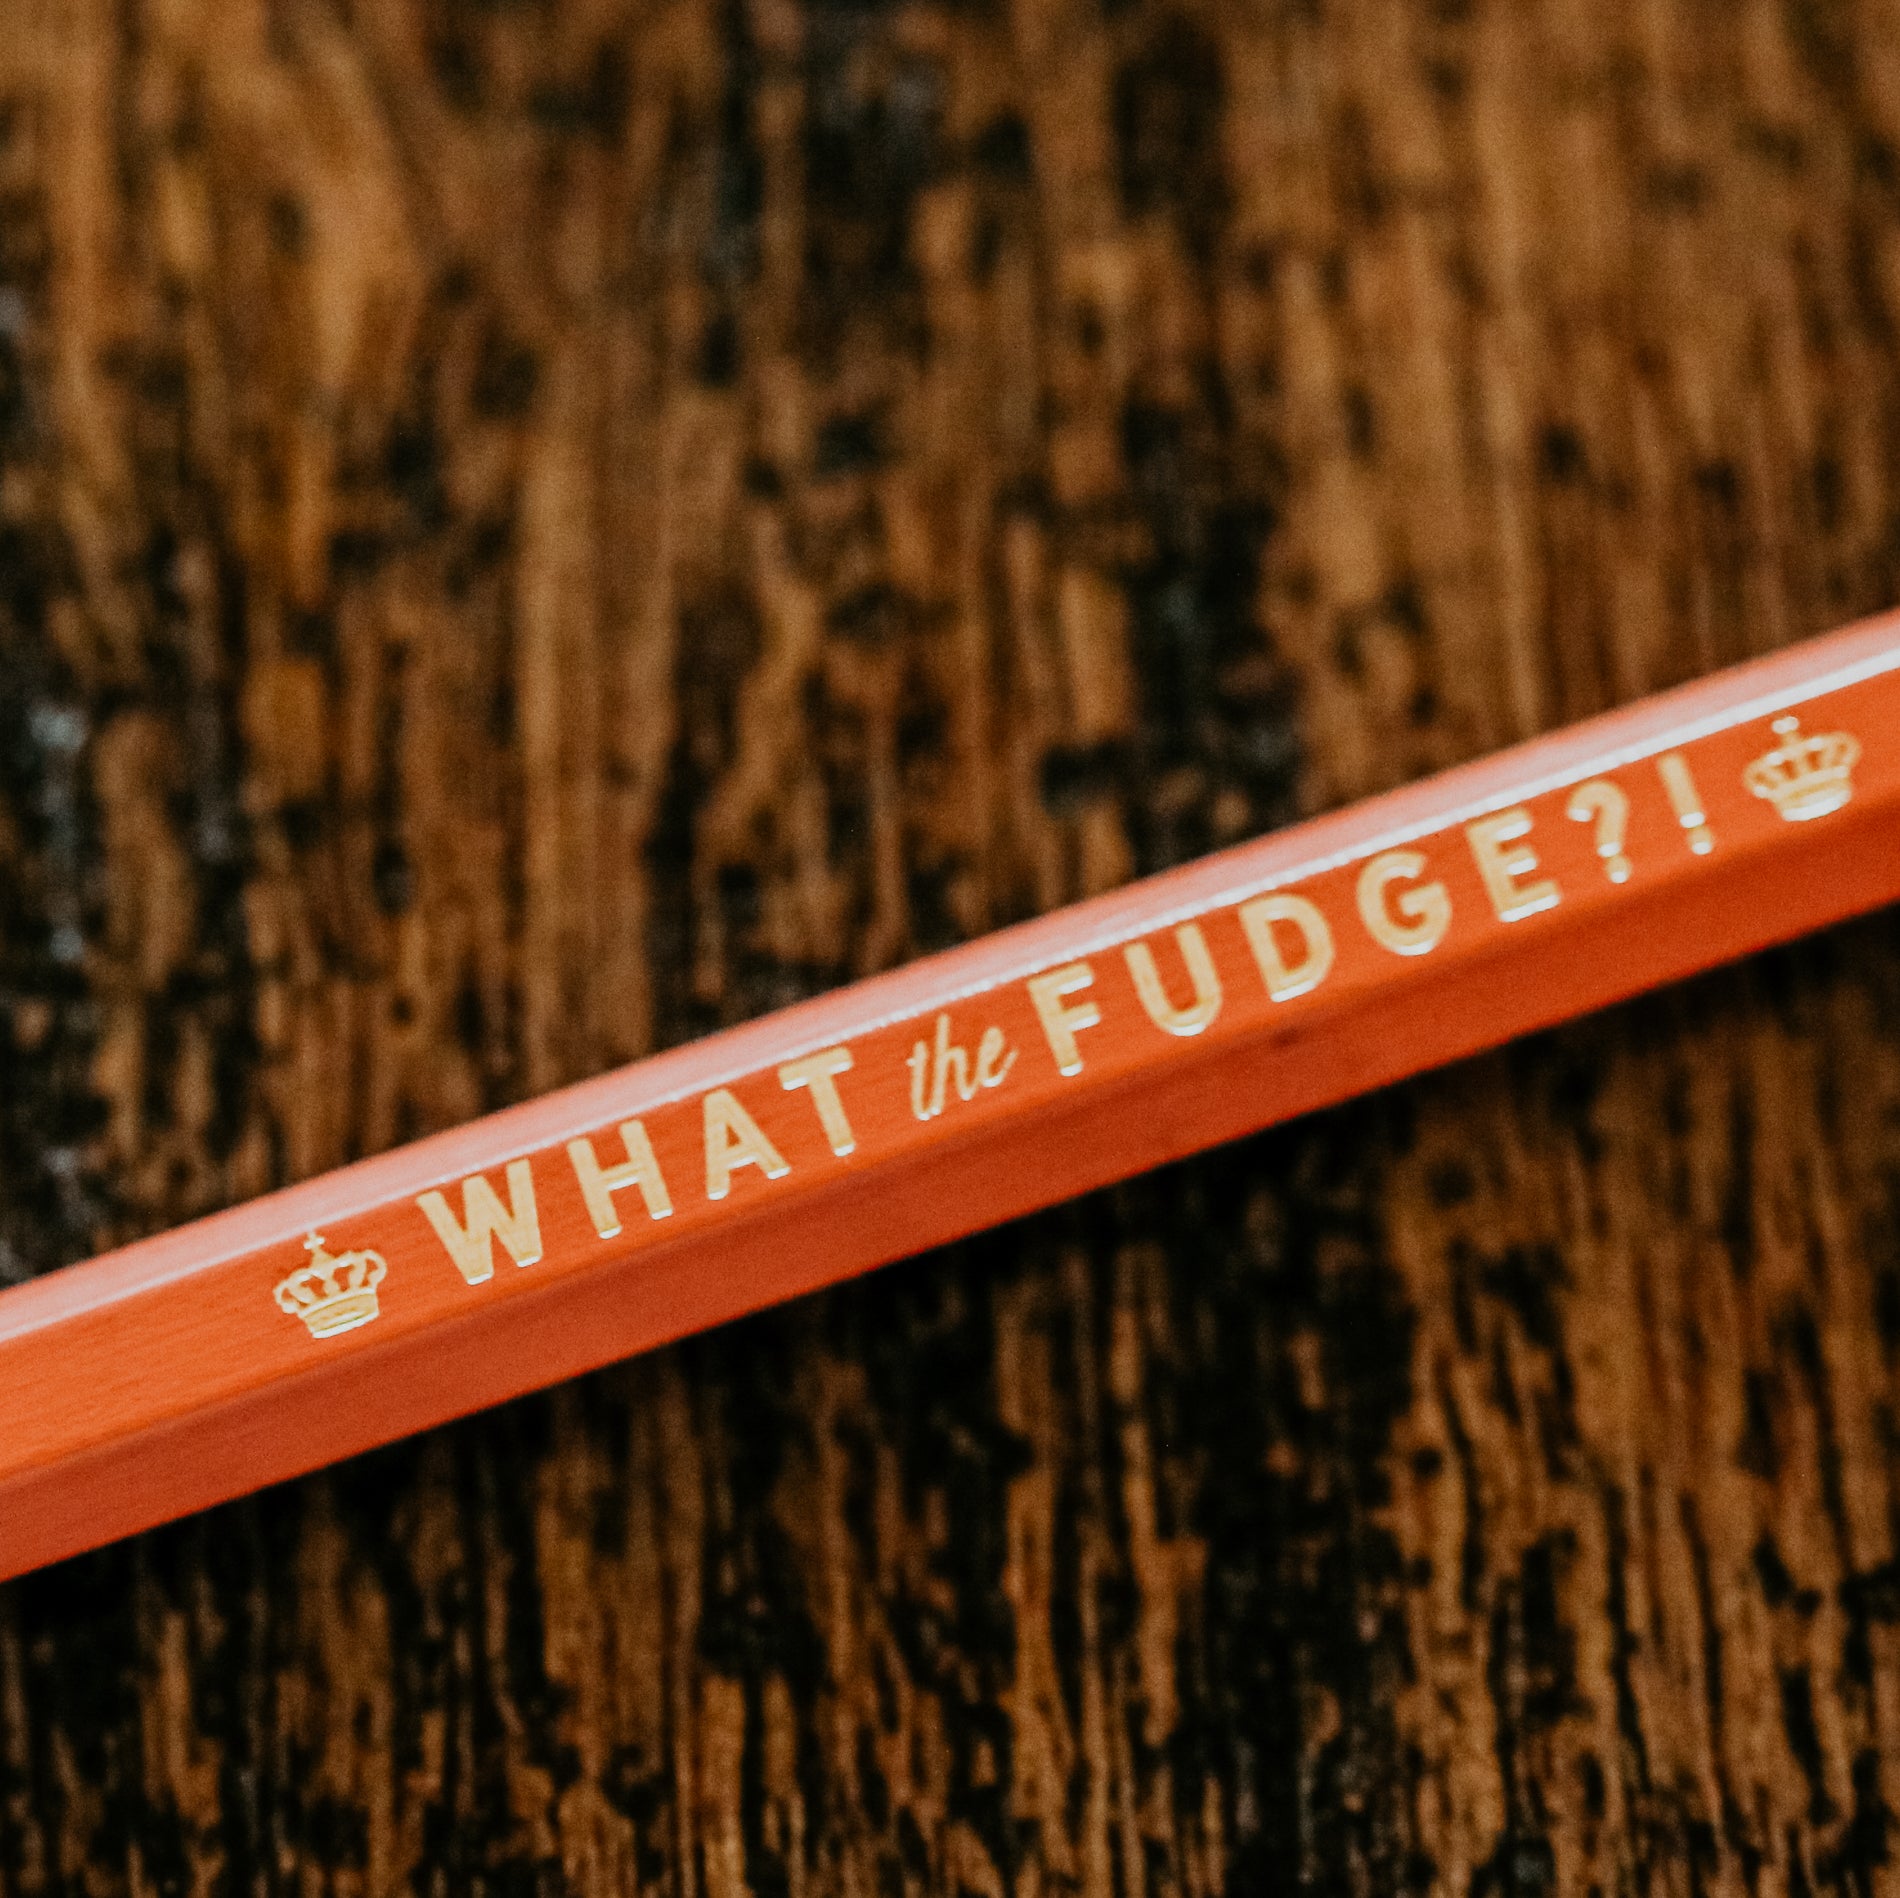 Designworks Pencil Set- Old School Swear Words